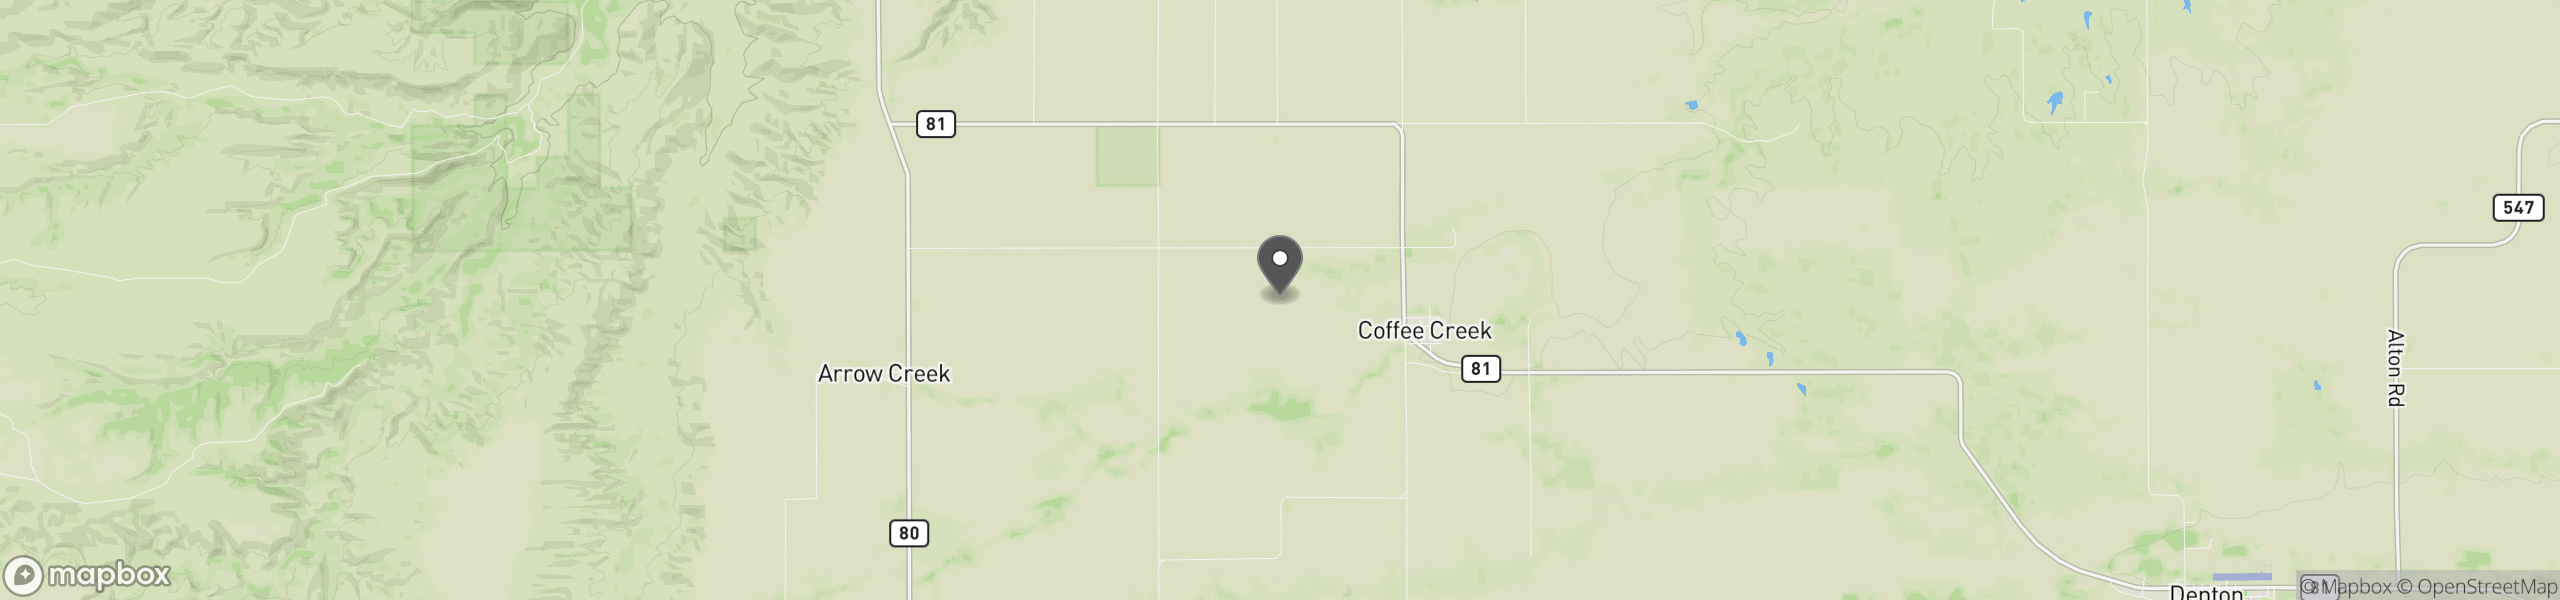 Coffee Creek, MT 59424